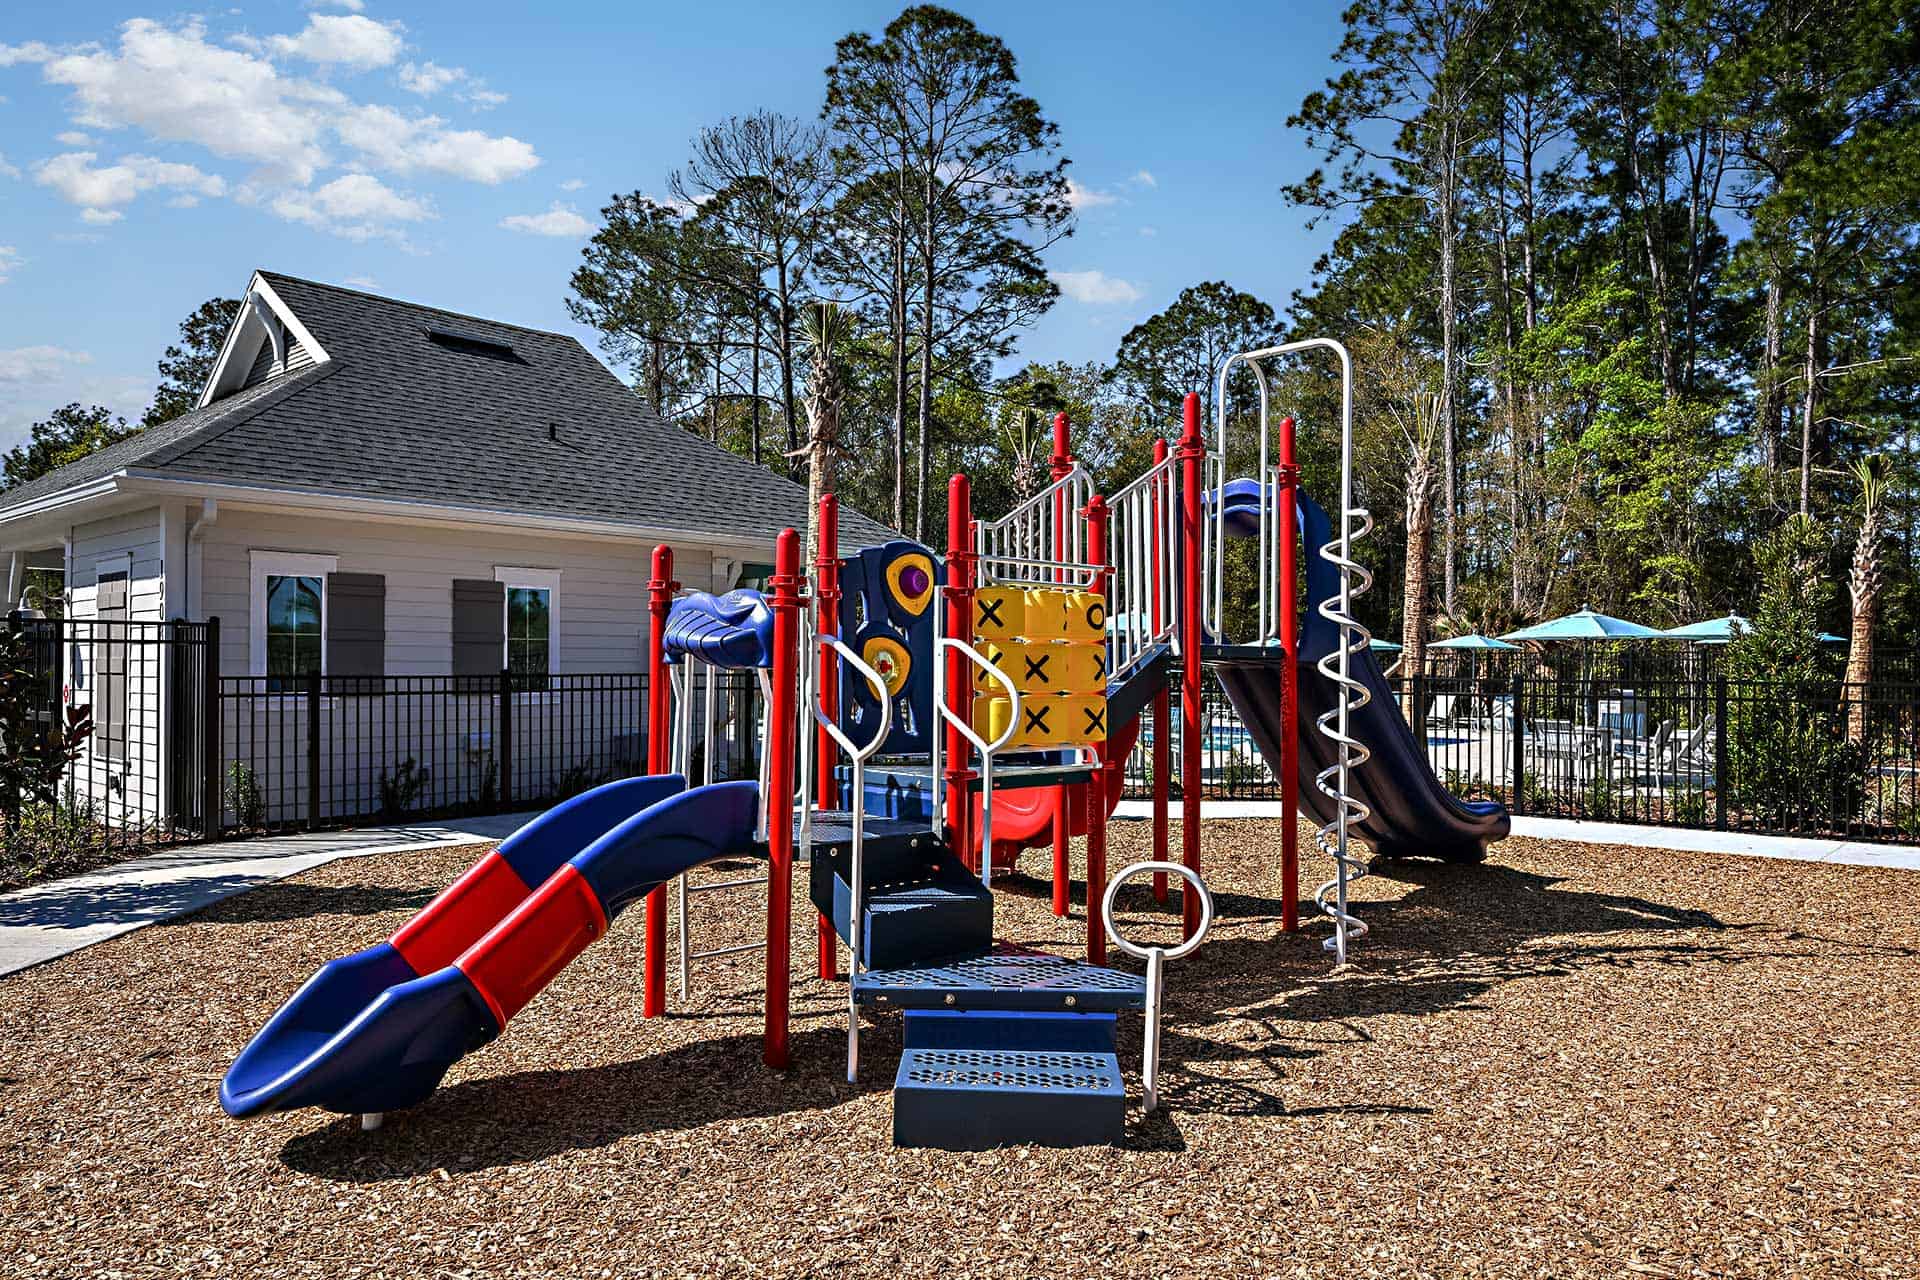 Liberty Square Amenity Center playground and pavilion